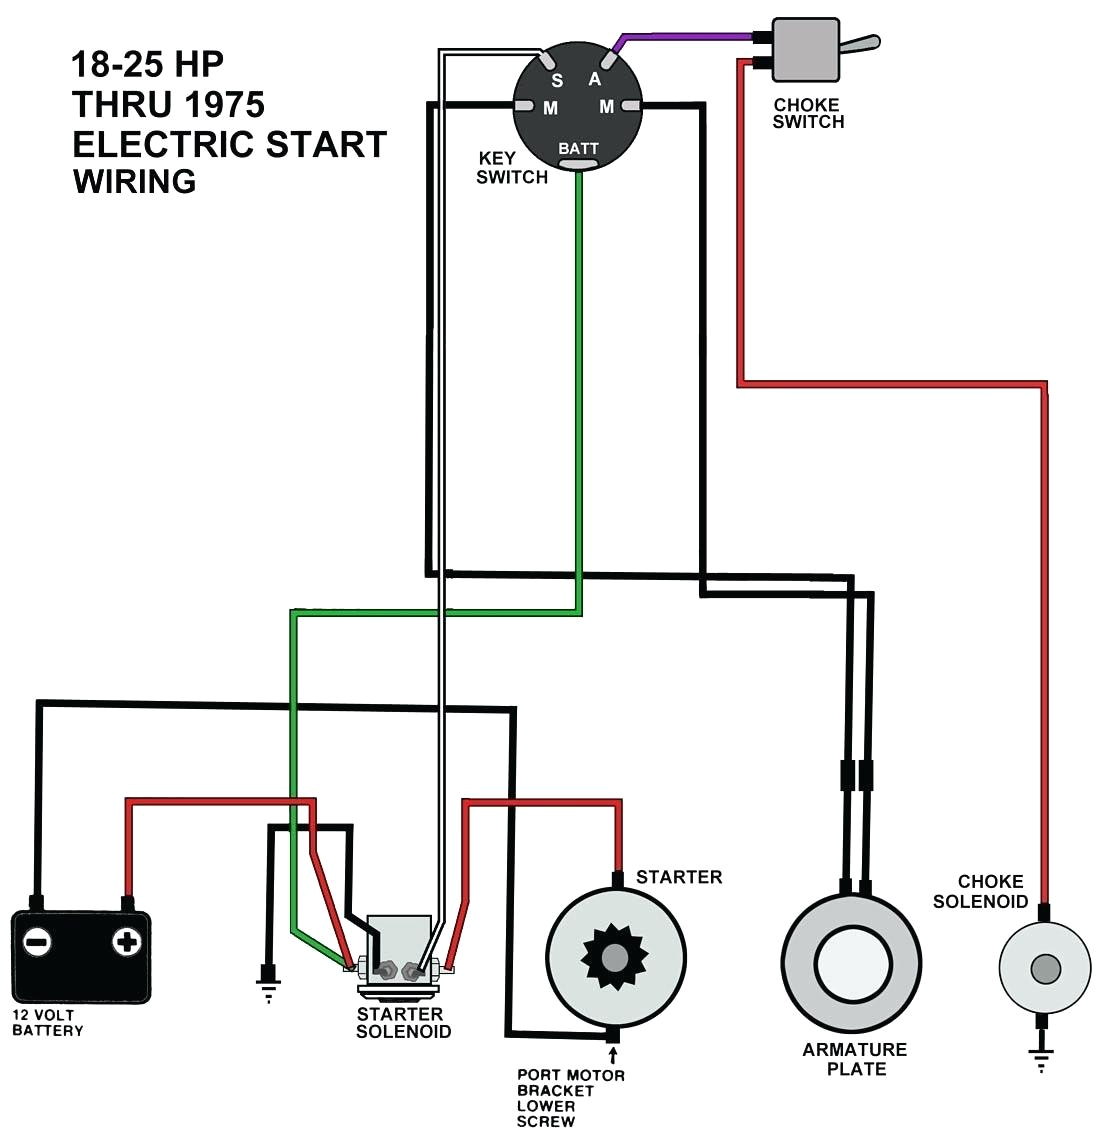 fine ford ignition switch wiring diagram ignition switch wiring diagram whatchudoin us rh whatchudoin us ignition system wiring diagram ignition system wiring jpg